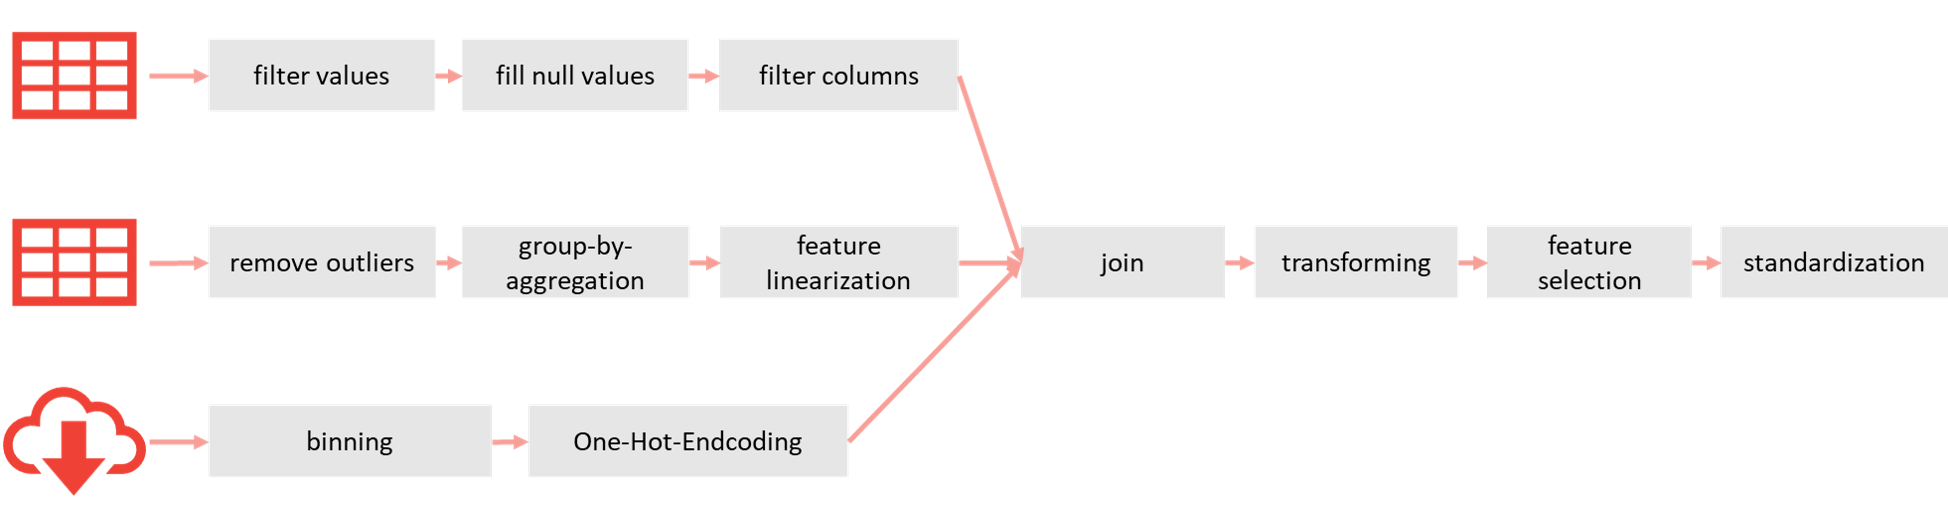 example_feature_stores_enginneering_workflow